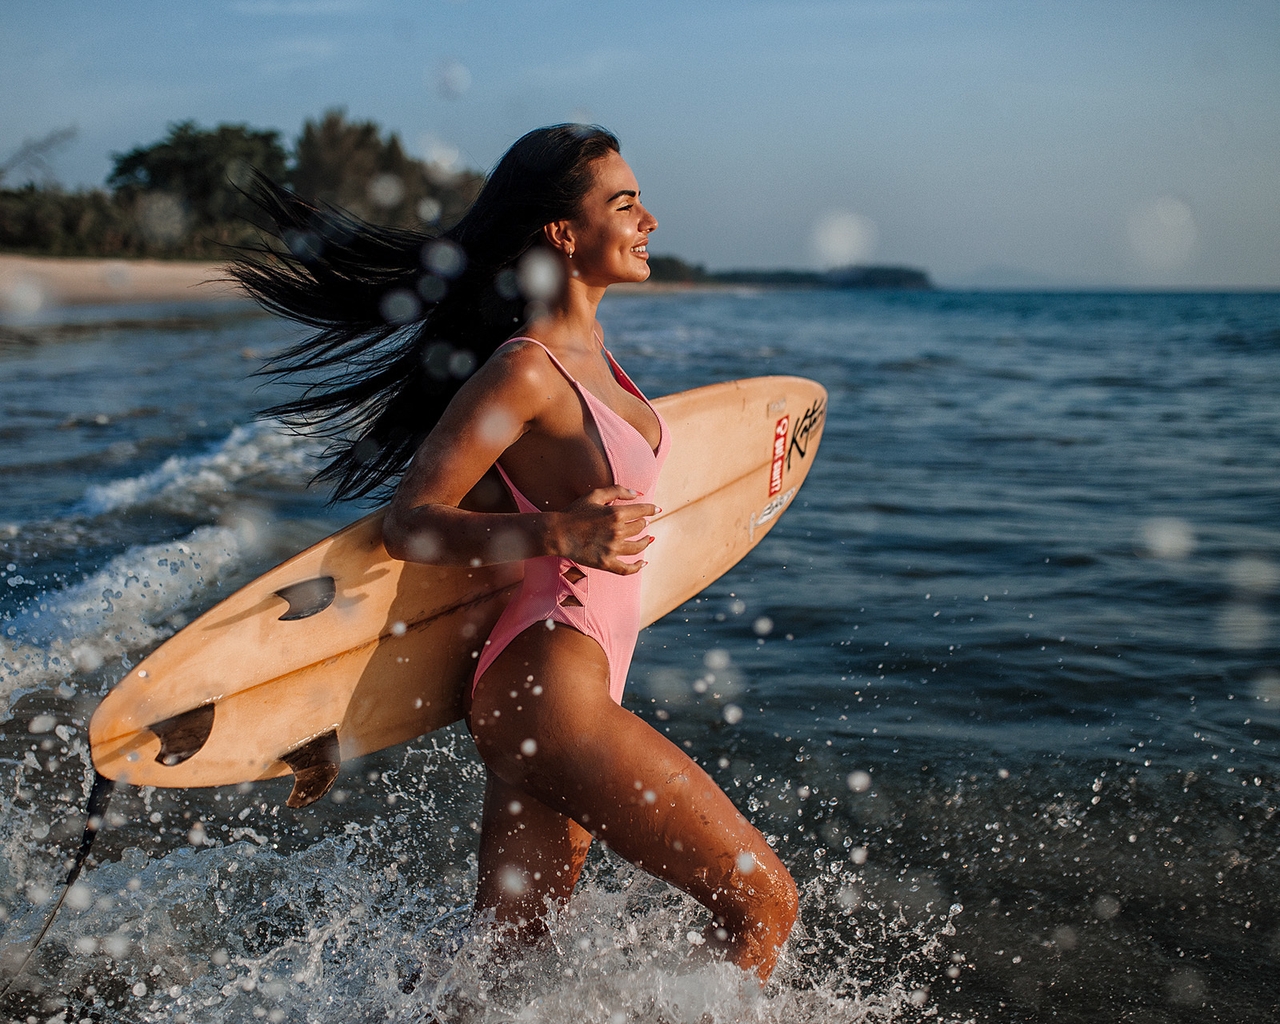 Image: Girl, sea, water, board, surfing, running, happy, brunette